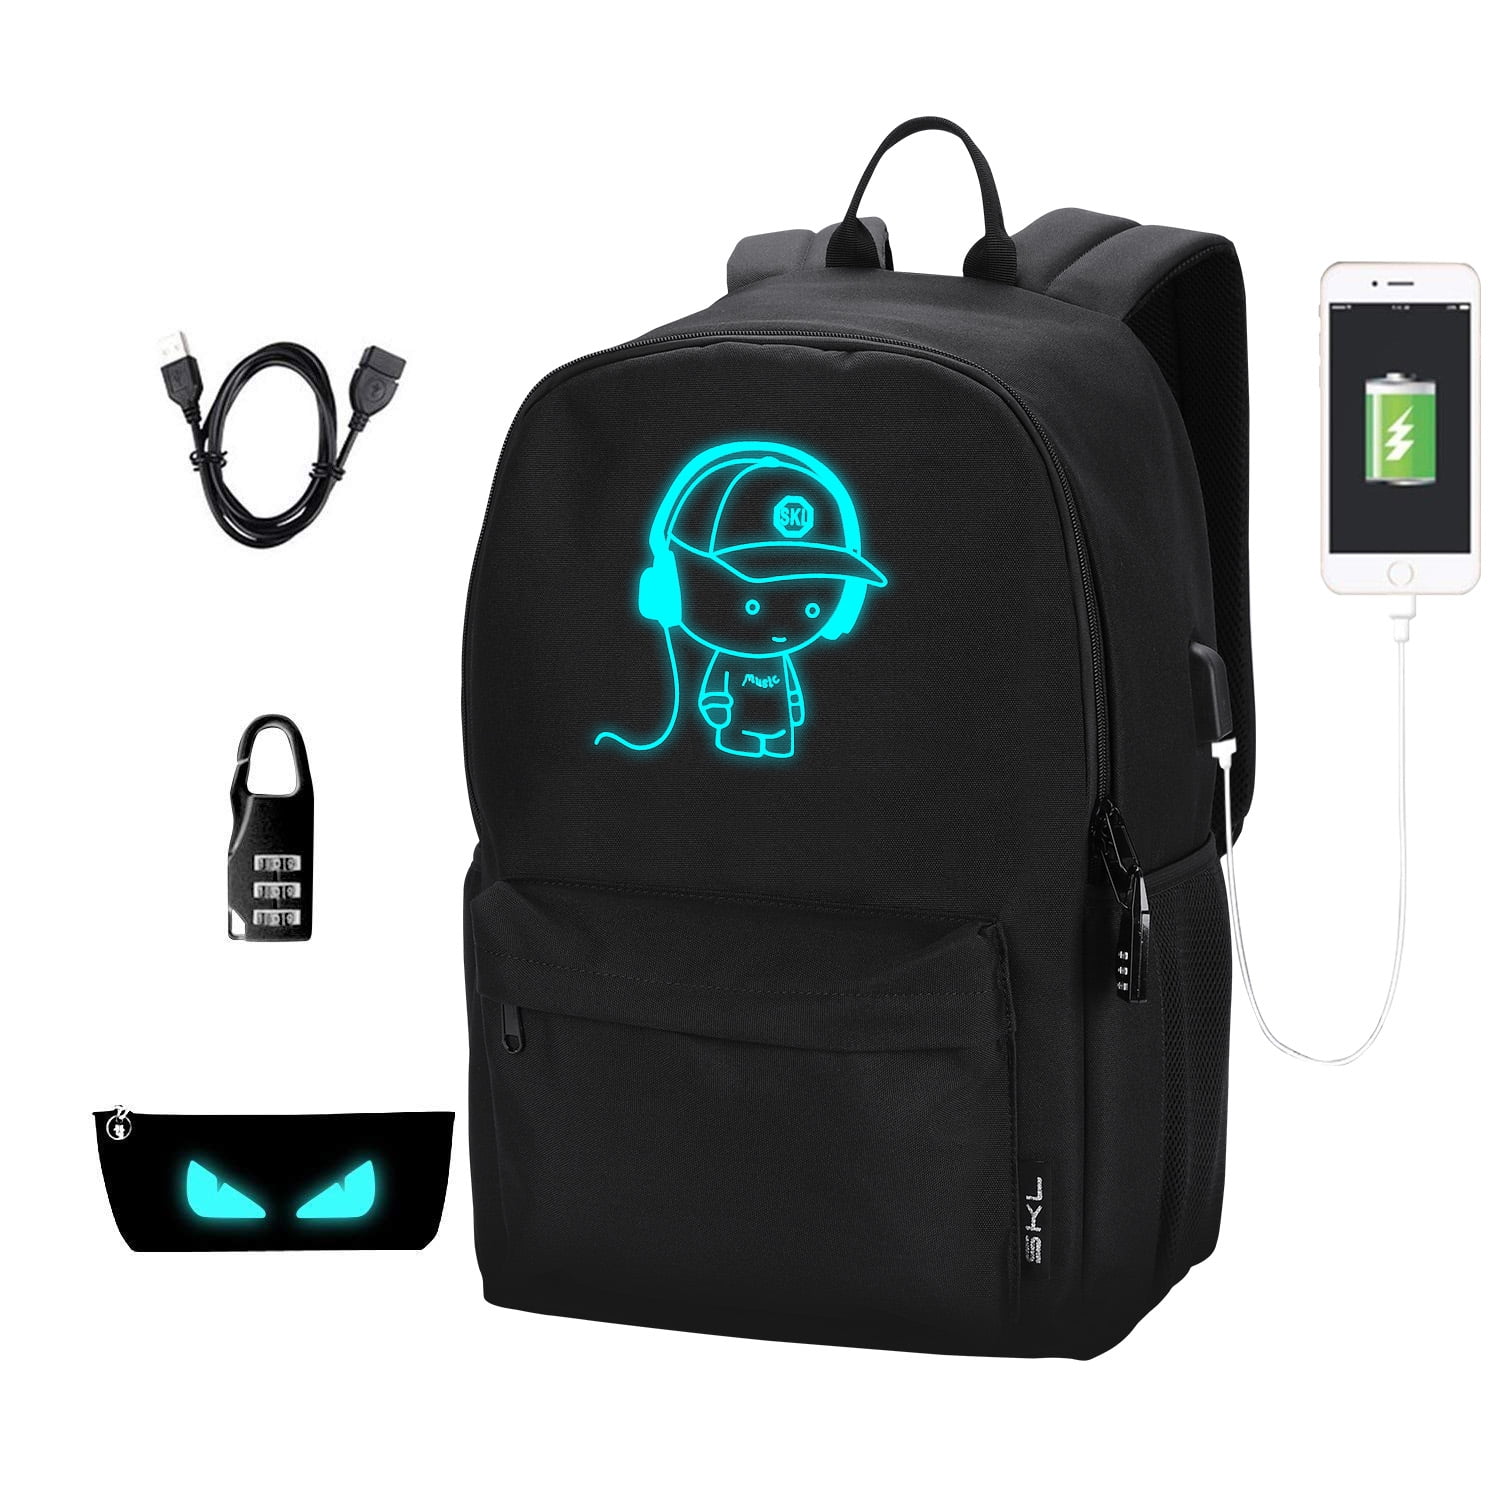 Retro Dinosaur Animal Silhouettes School Backpack Laptop Backpacks Casual Bookbags Daypack for Kids Girls Boys and Women